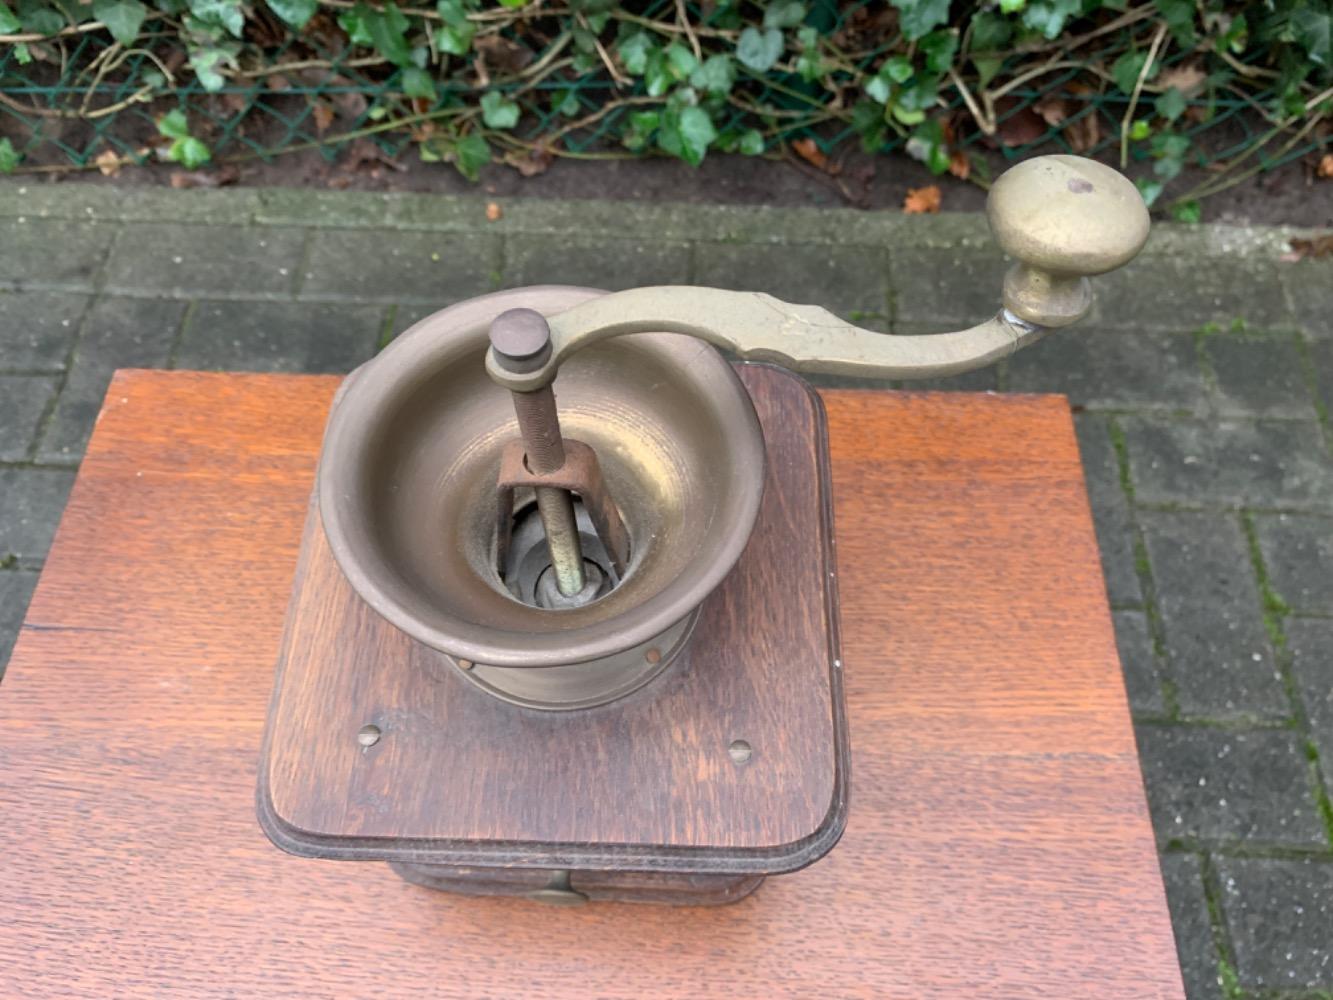 Flemish style Coffee grinder